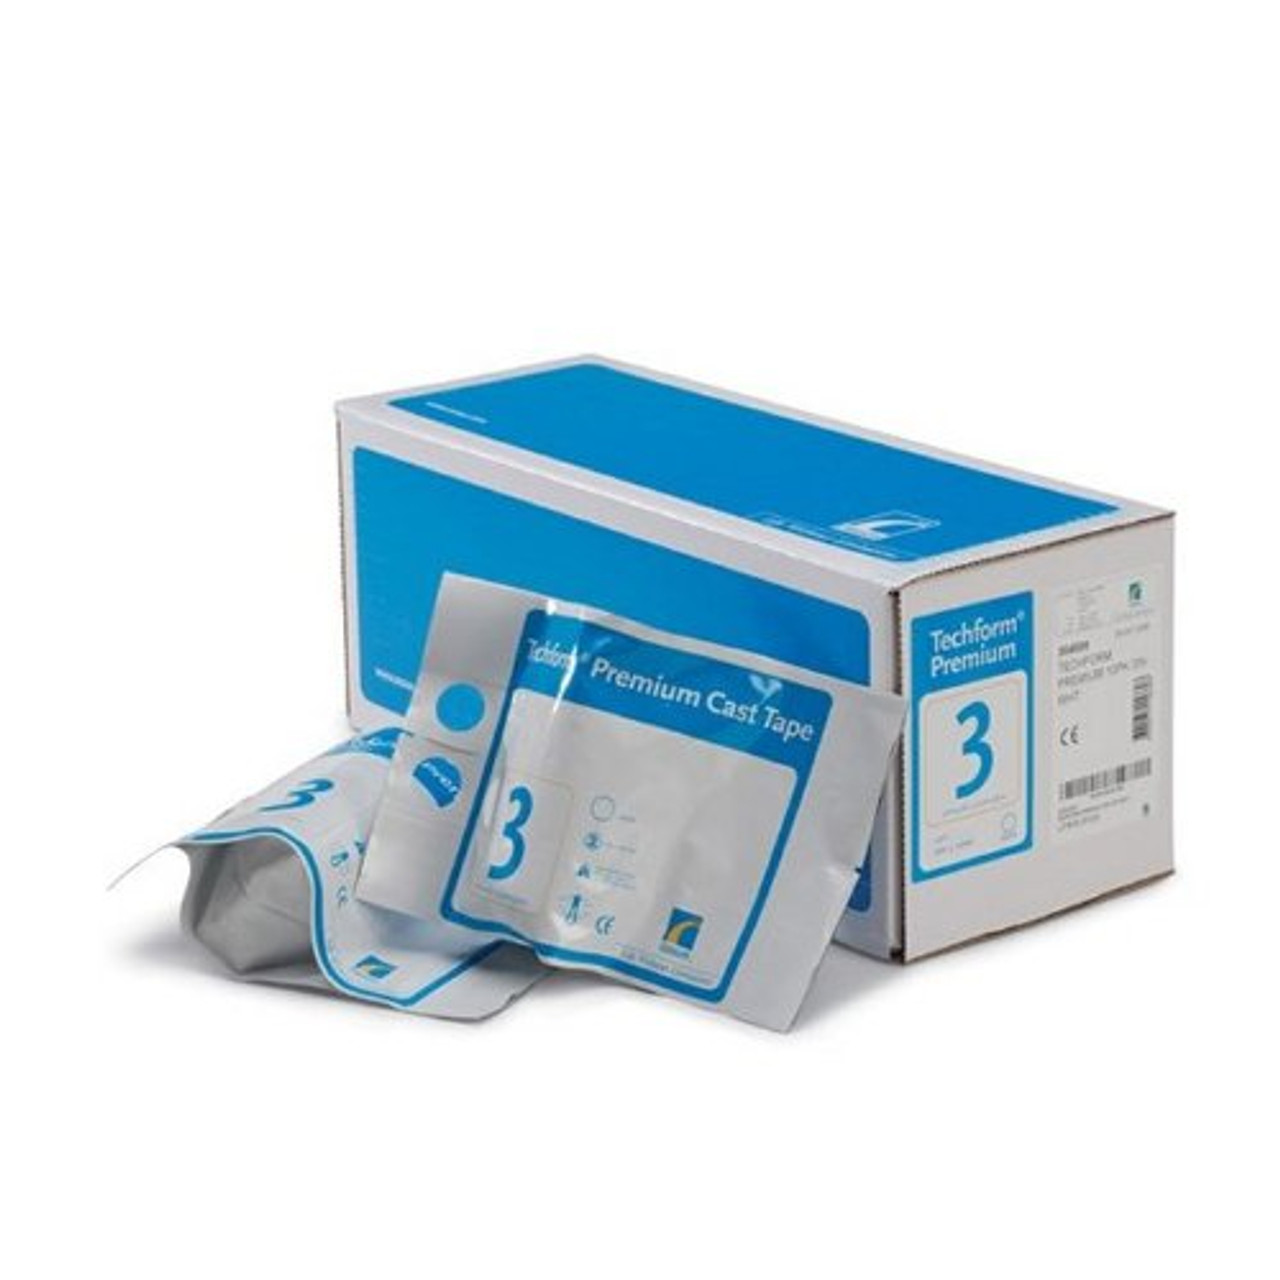 Stockinette T304WH (Tubular Cotton) & Casting Tape (Techform) Casting tape, 3" (white) box of 10 (Stockinette T304WH)